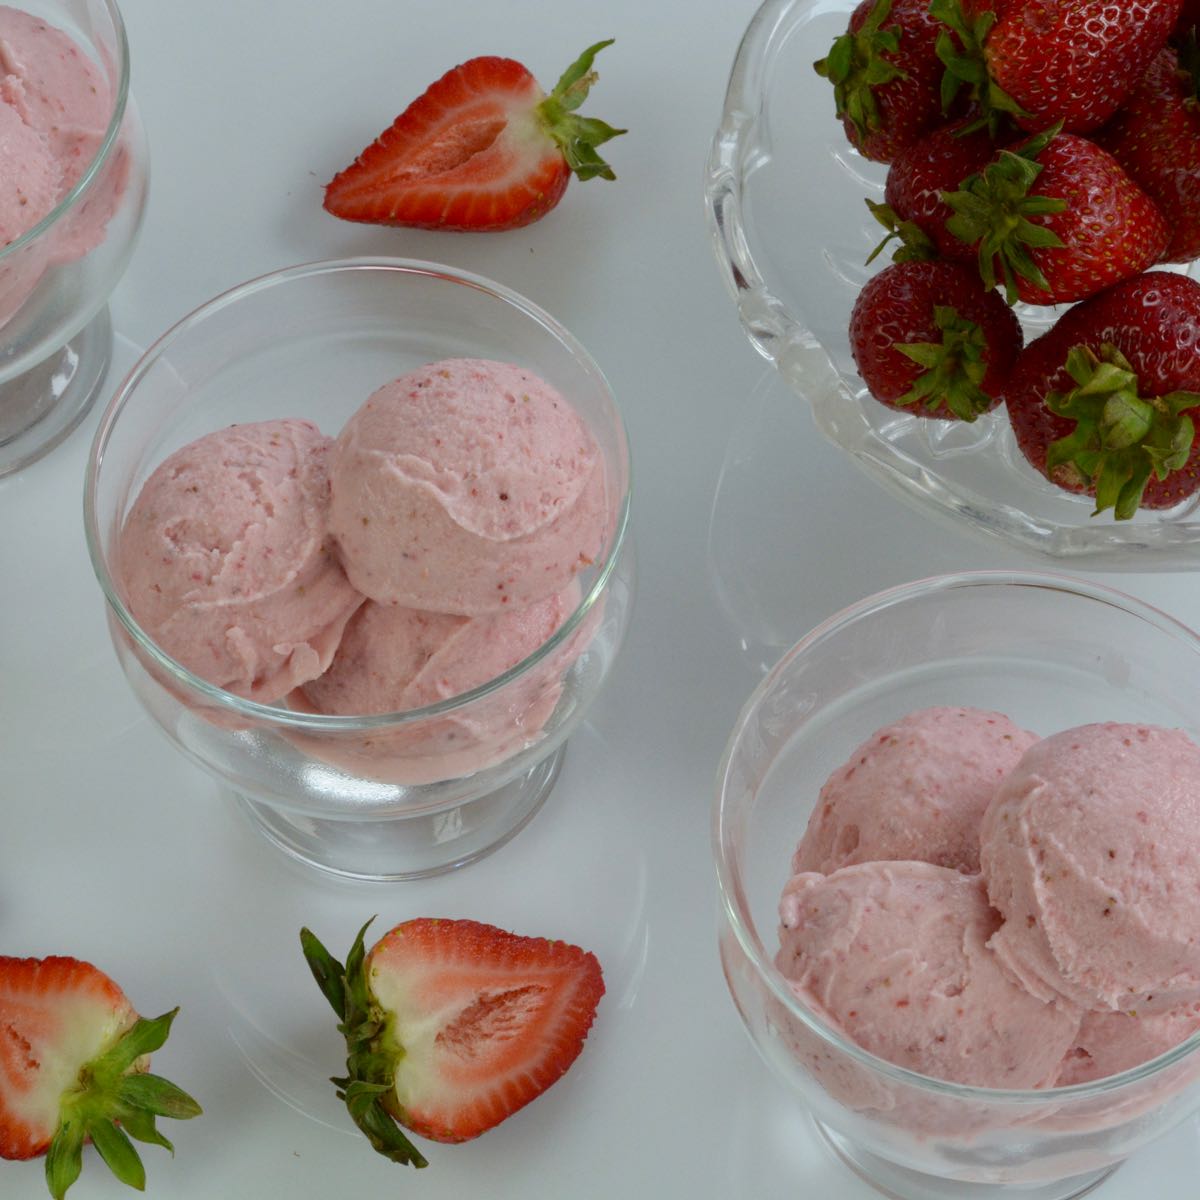 Dishes of Strawberry Cheesecake Ice Cream with fresh strawberries for garnish.